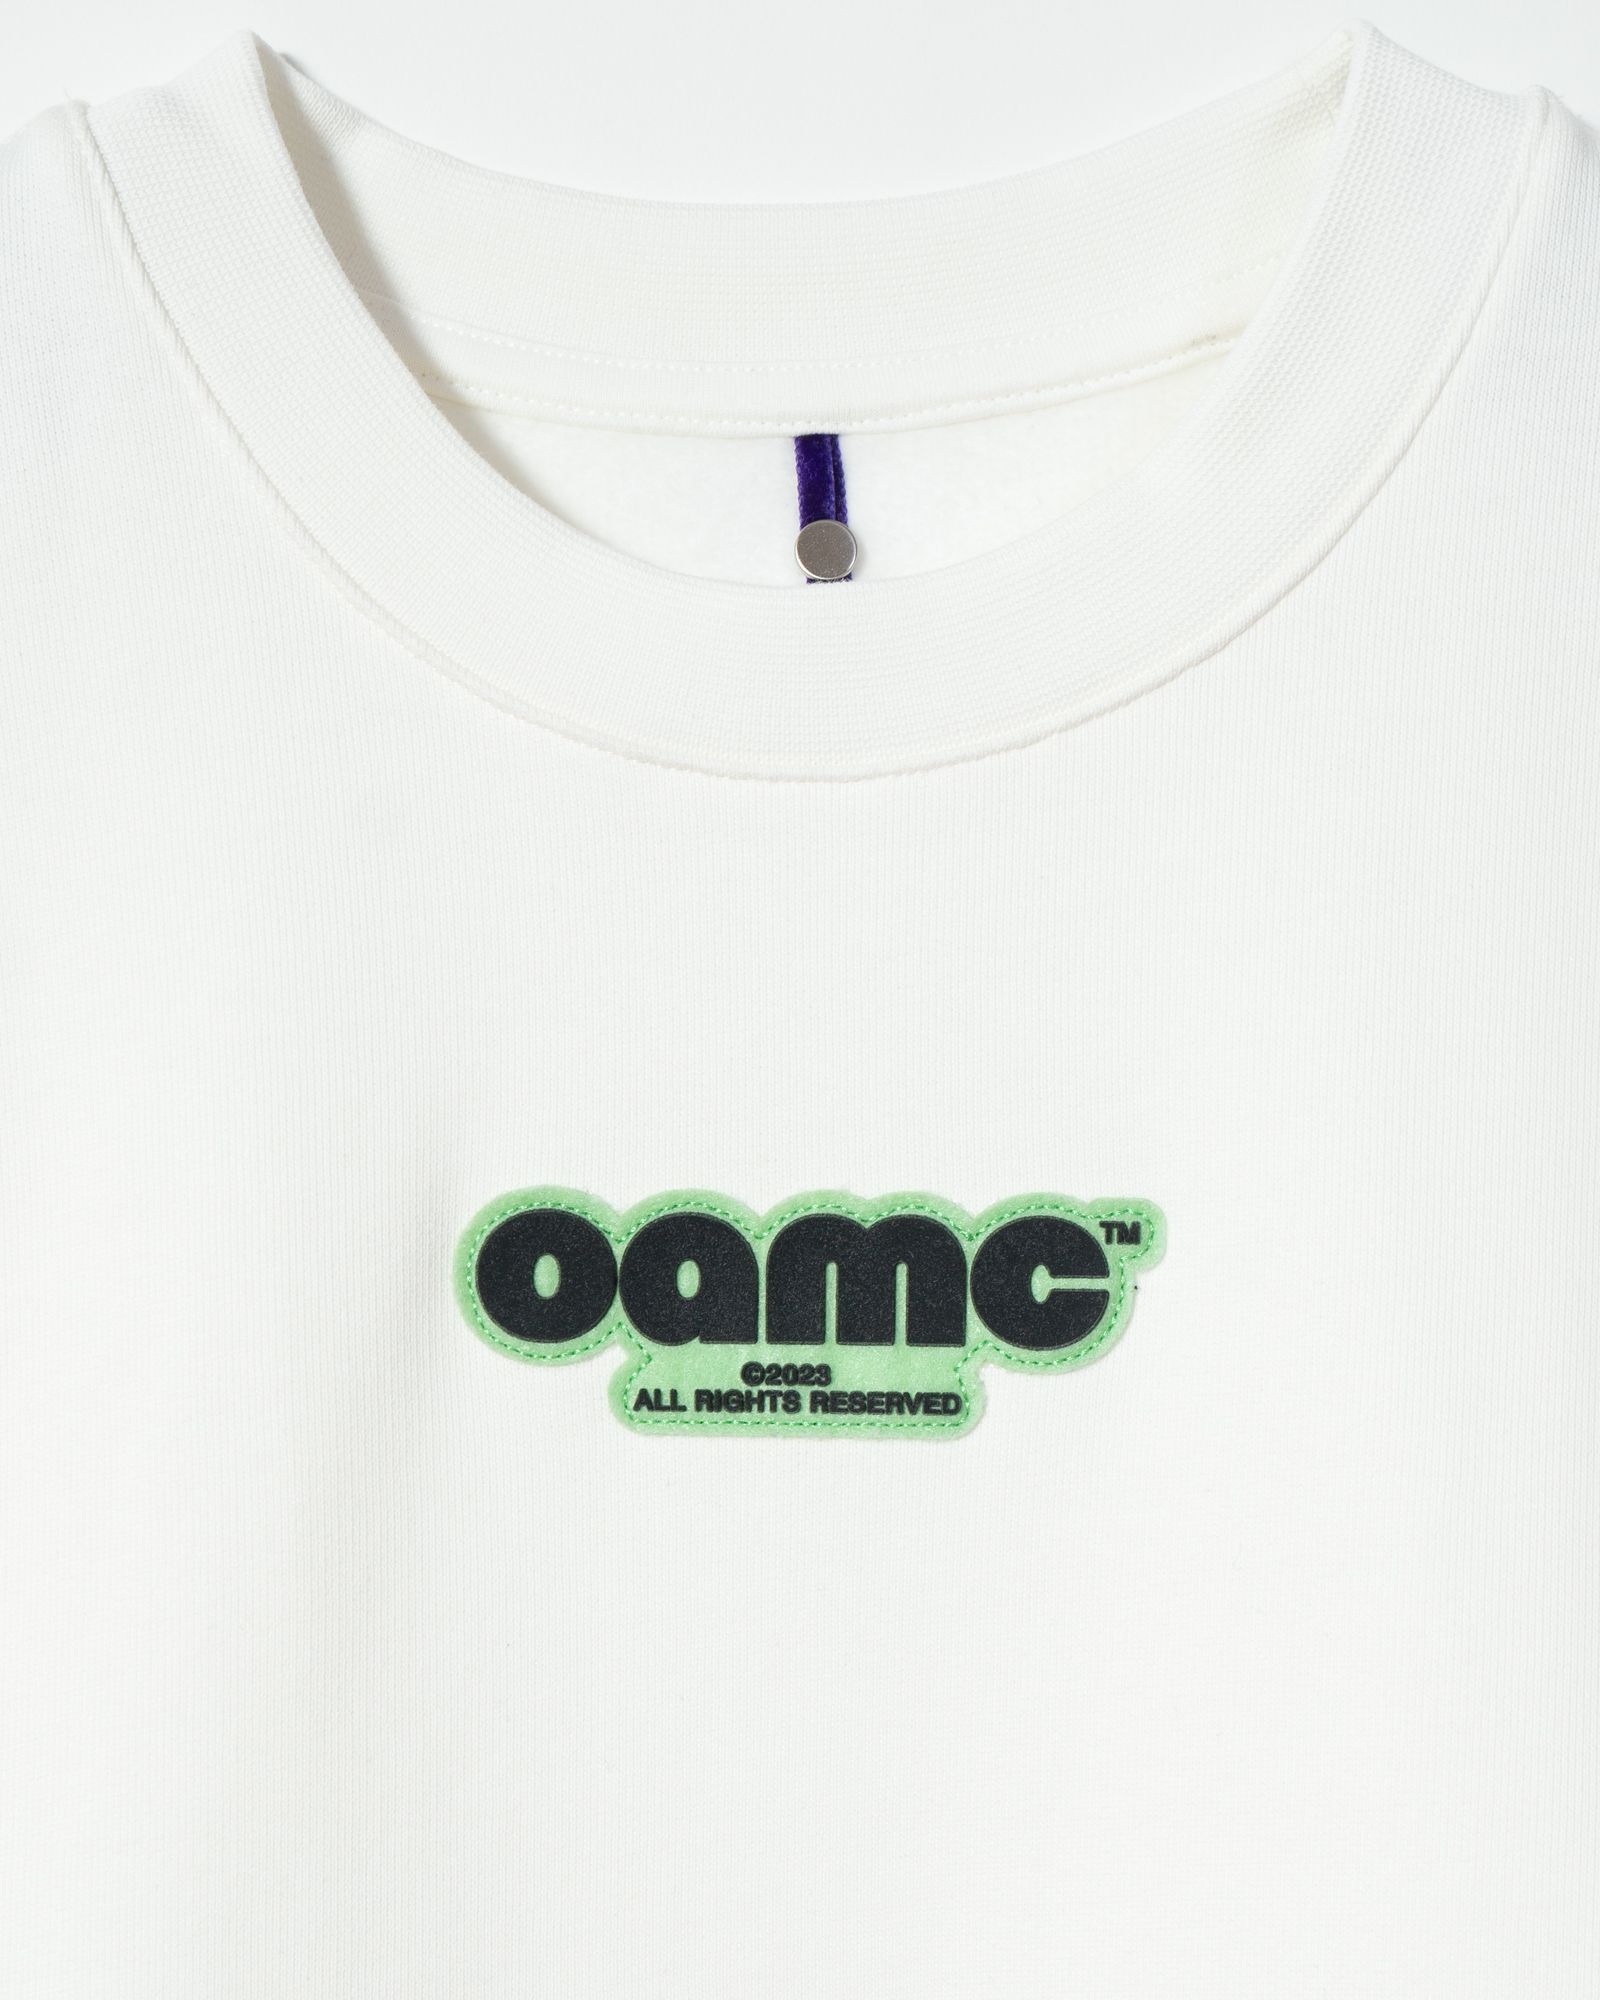 OAMC TILT CREWNECK ロゴ クルーネック スウェット sizeS